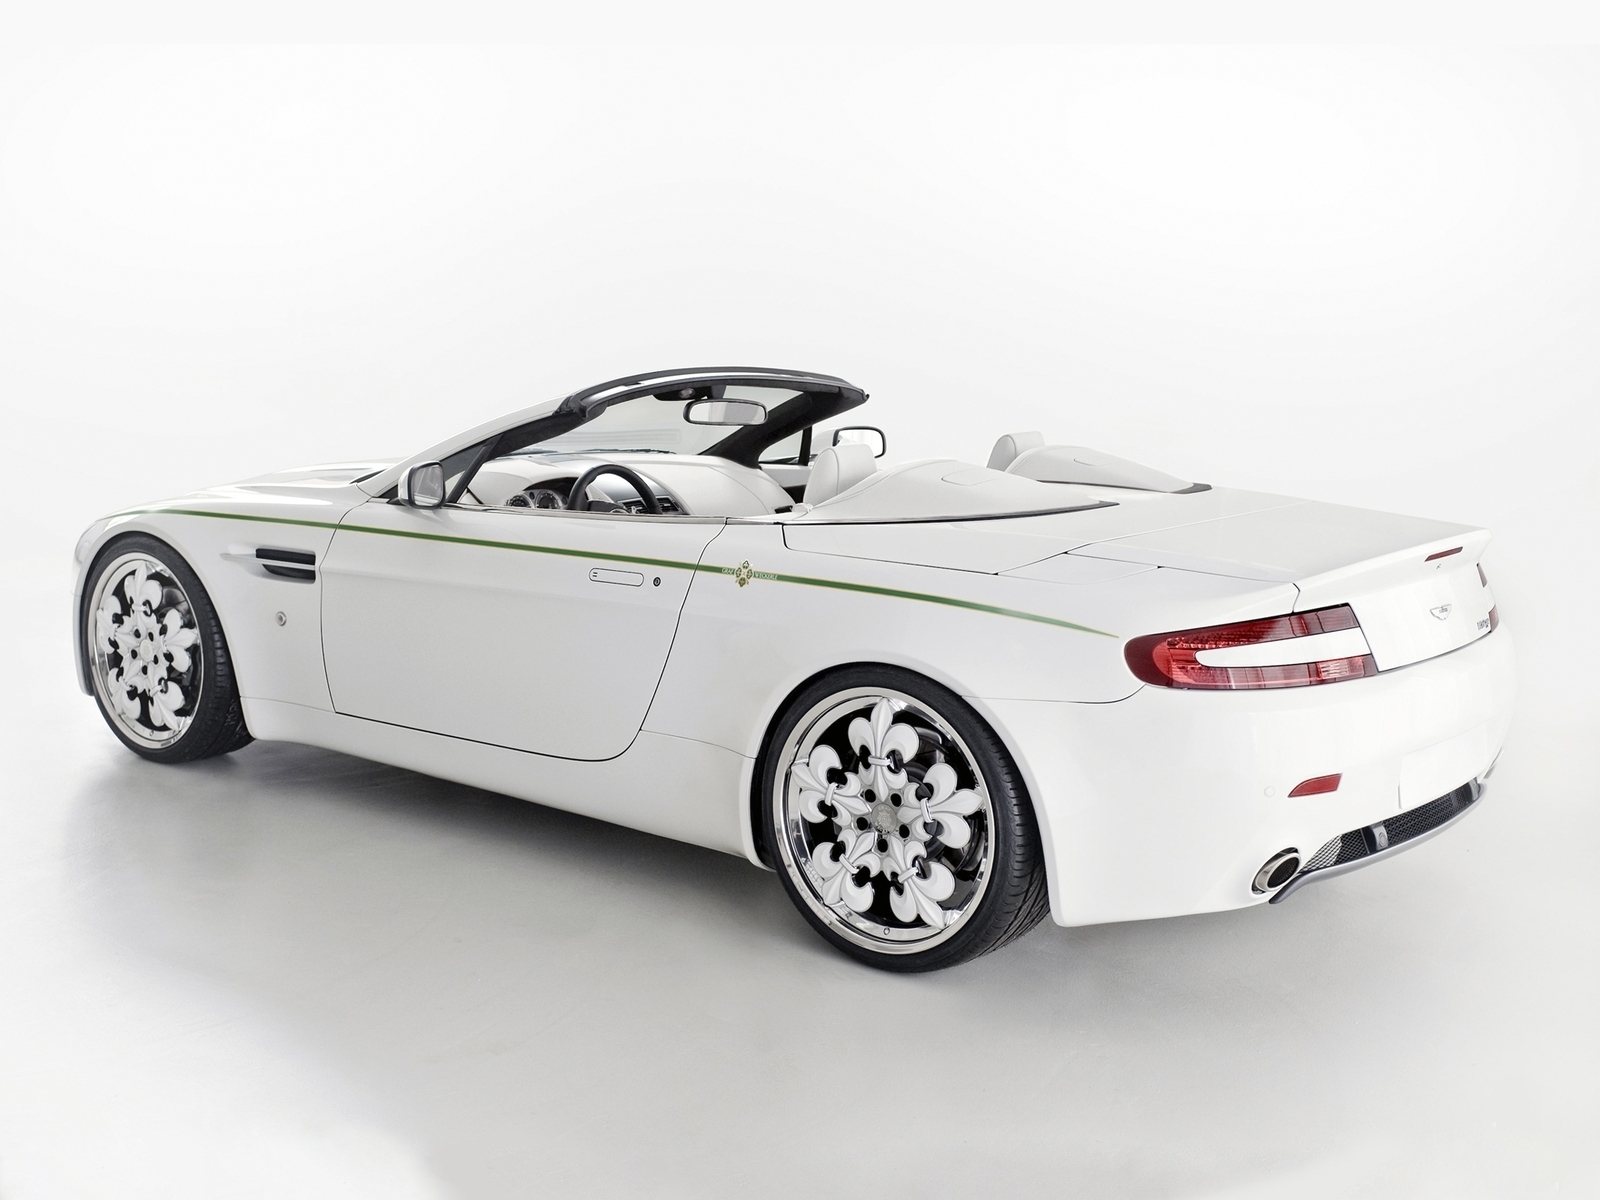 Image: Aston Martin, V8, Vantage, white, Roadster, white background, wheels